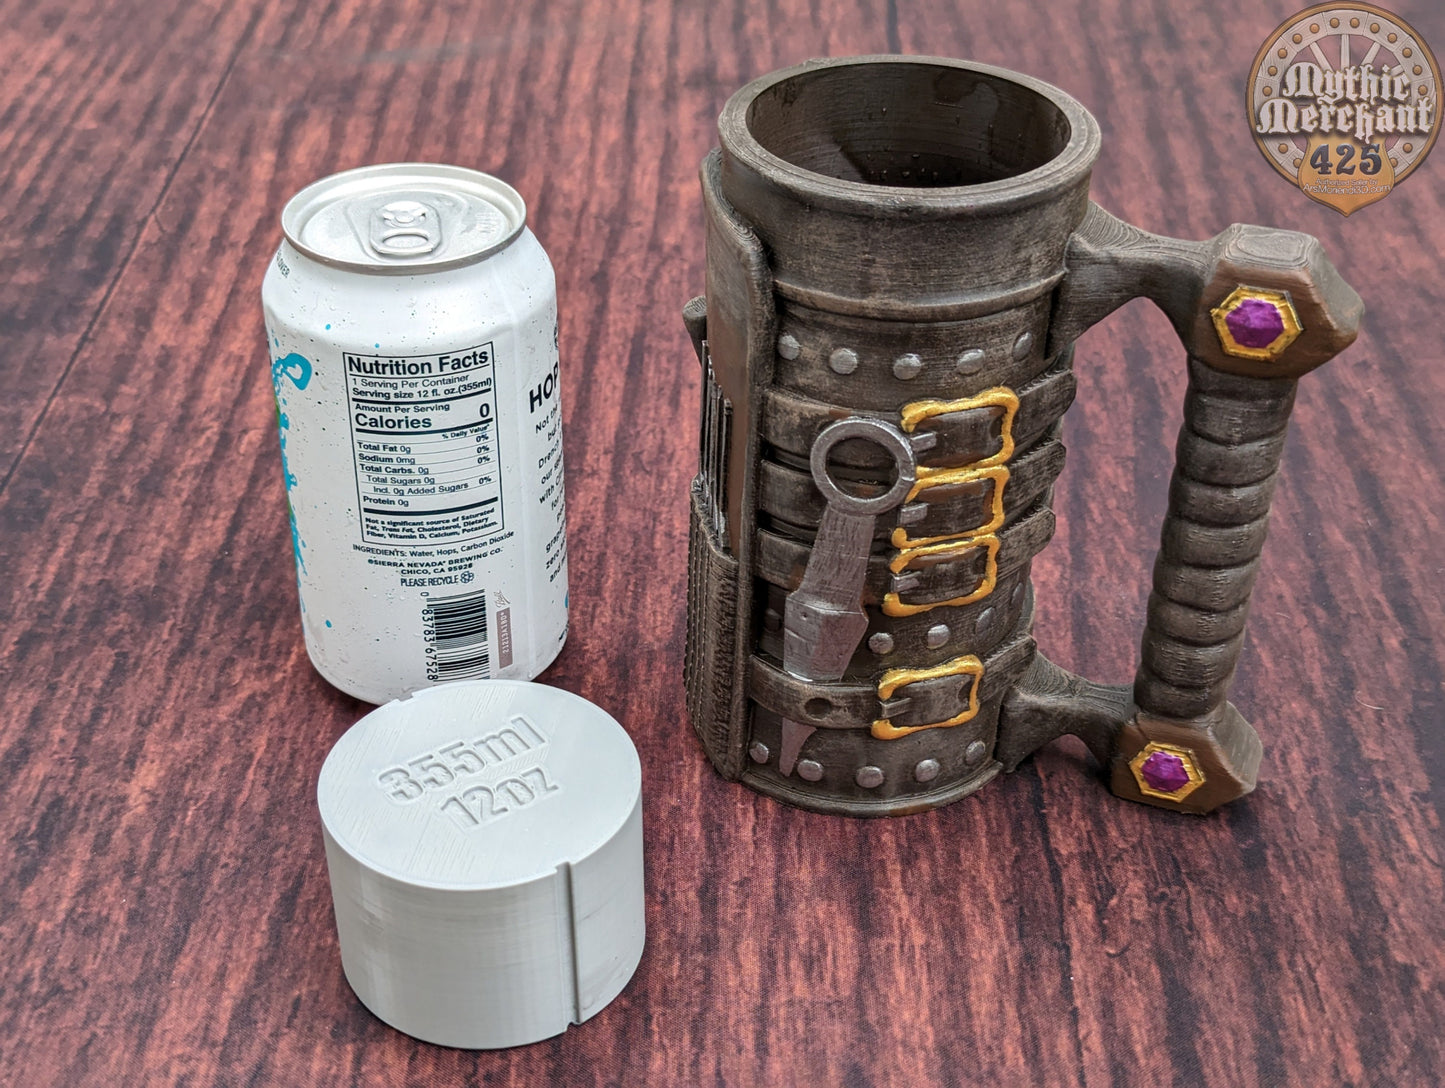 Rogue-Thief Mythic Mug Dice Vault & Can Holder- Mythic Mugs- Ars Moriendi 3D